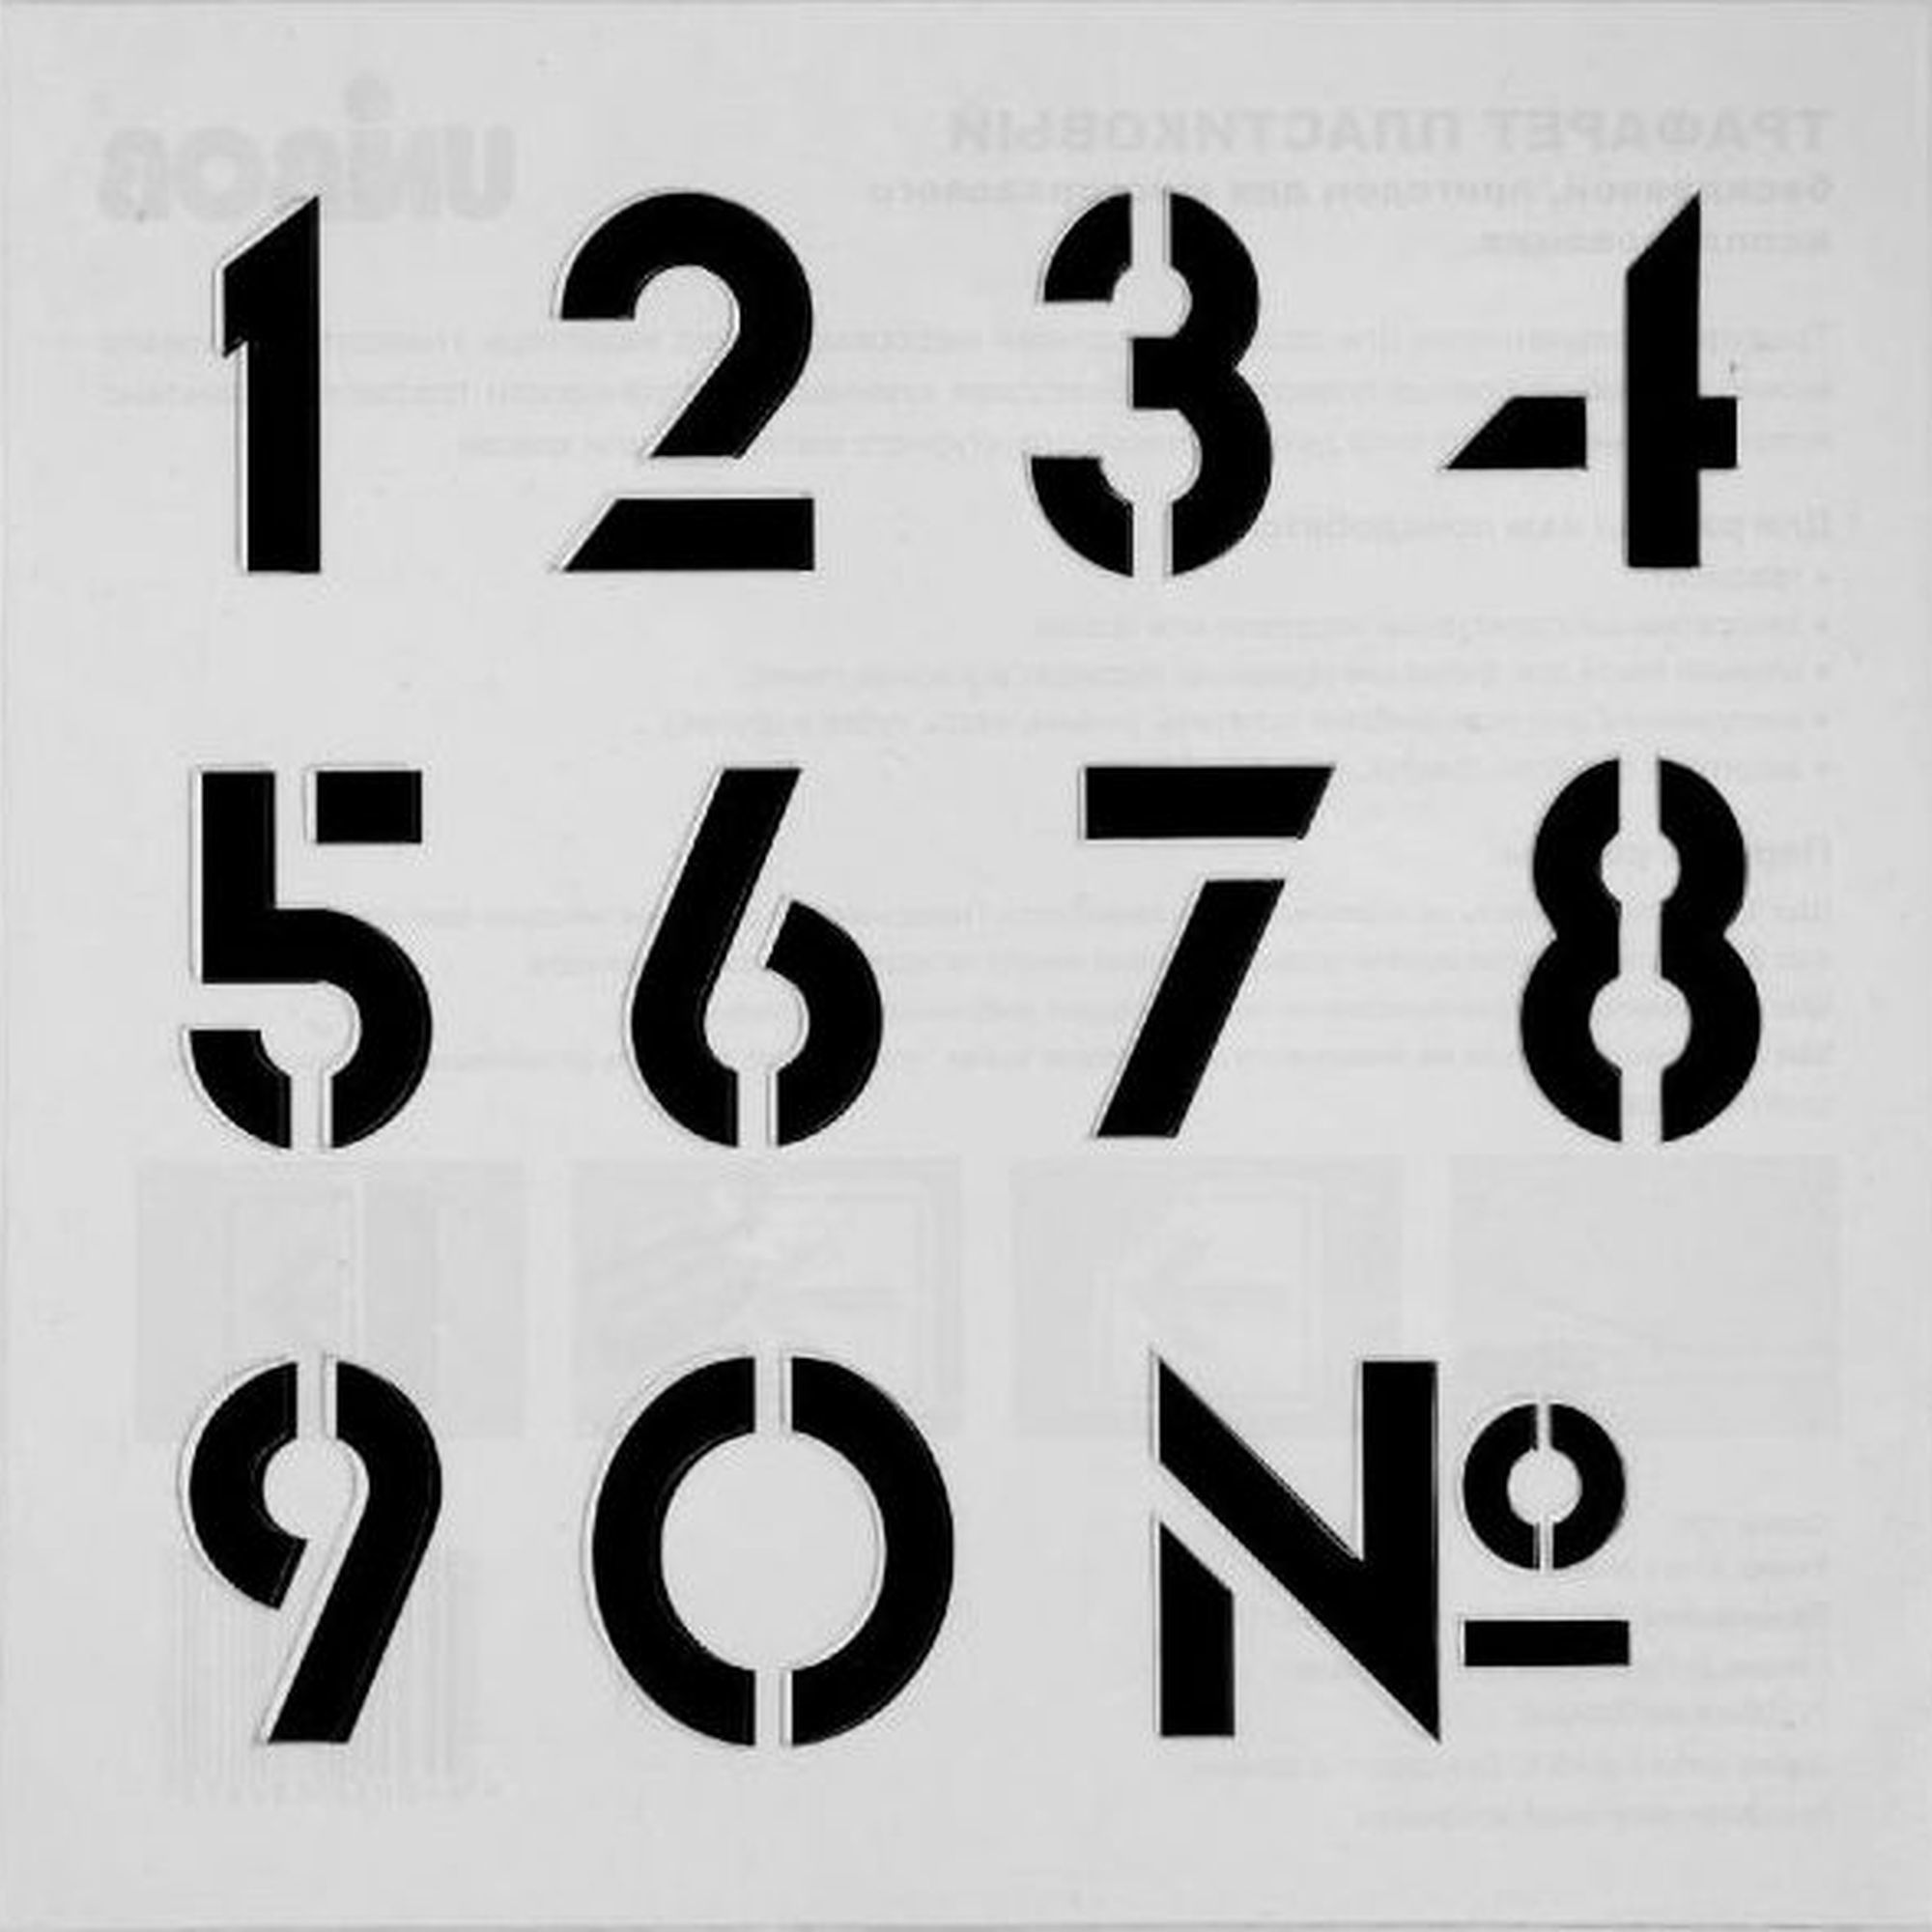 Трафарет цифр (0, 1, 2, 3, 4, 5, 6, 7, 8, 9) для вырезания из бумаги А4.